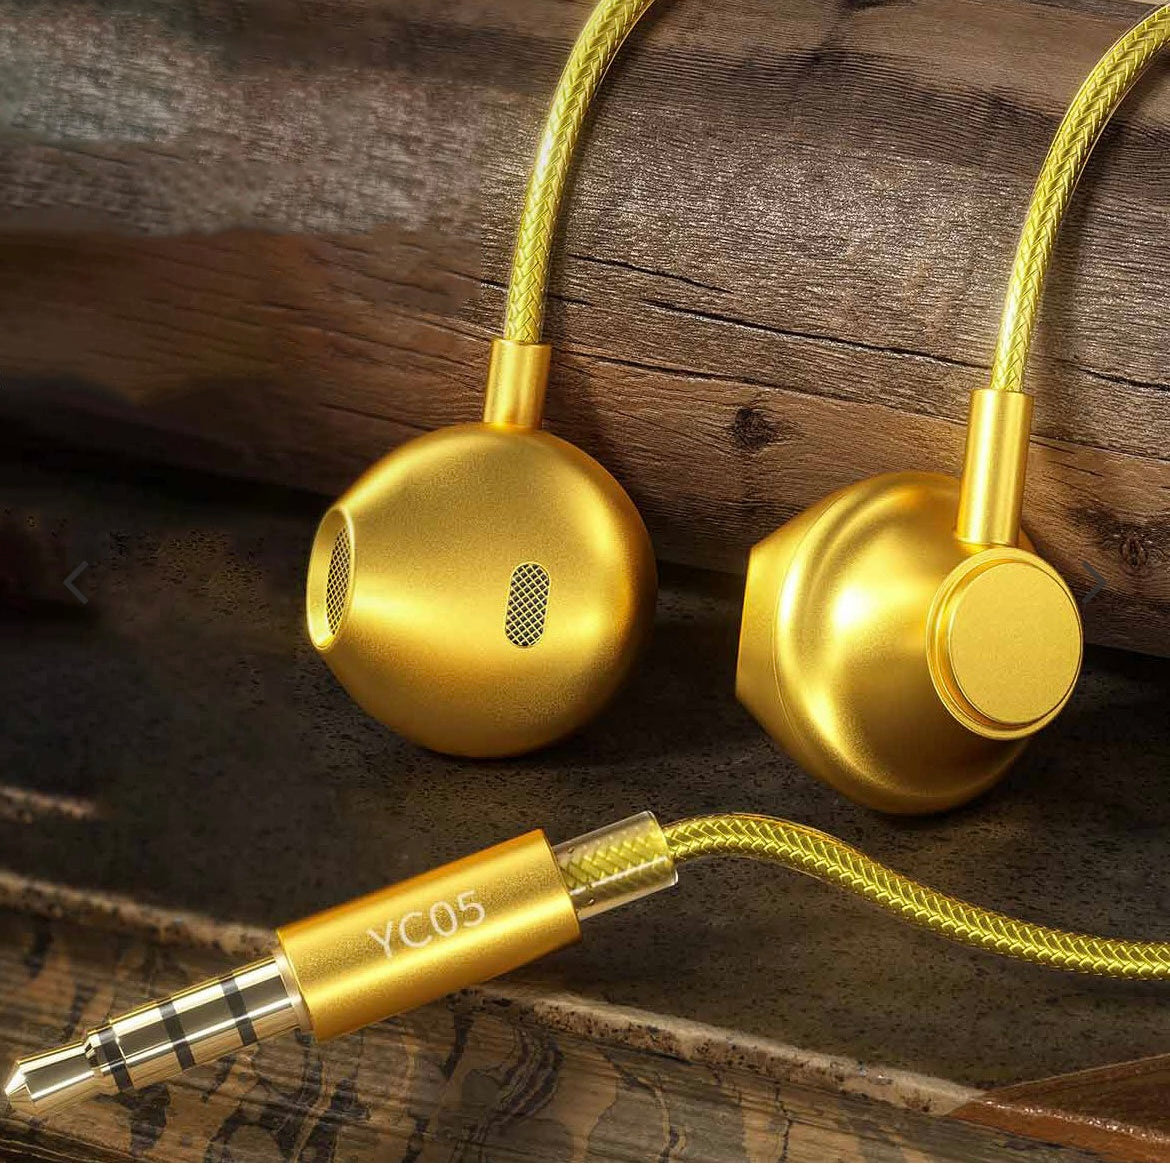 YC05 Sakin Series Headphones 3.5mm Mini Jack-Gold